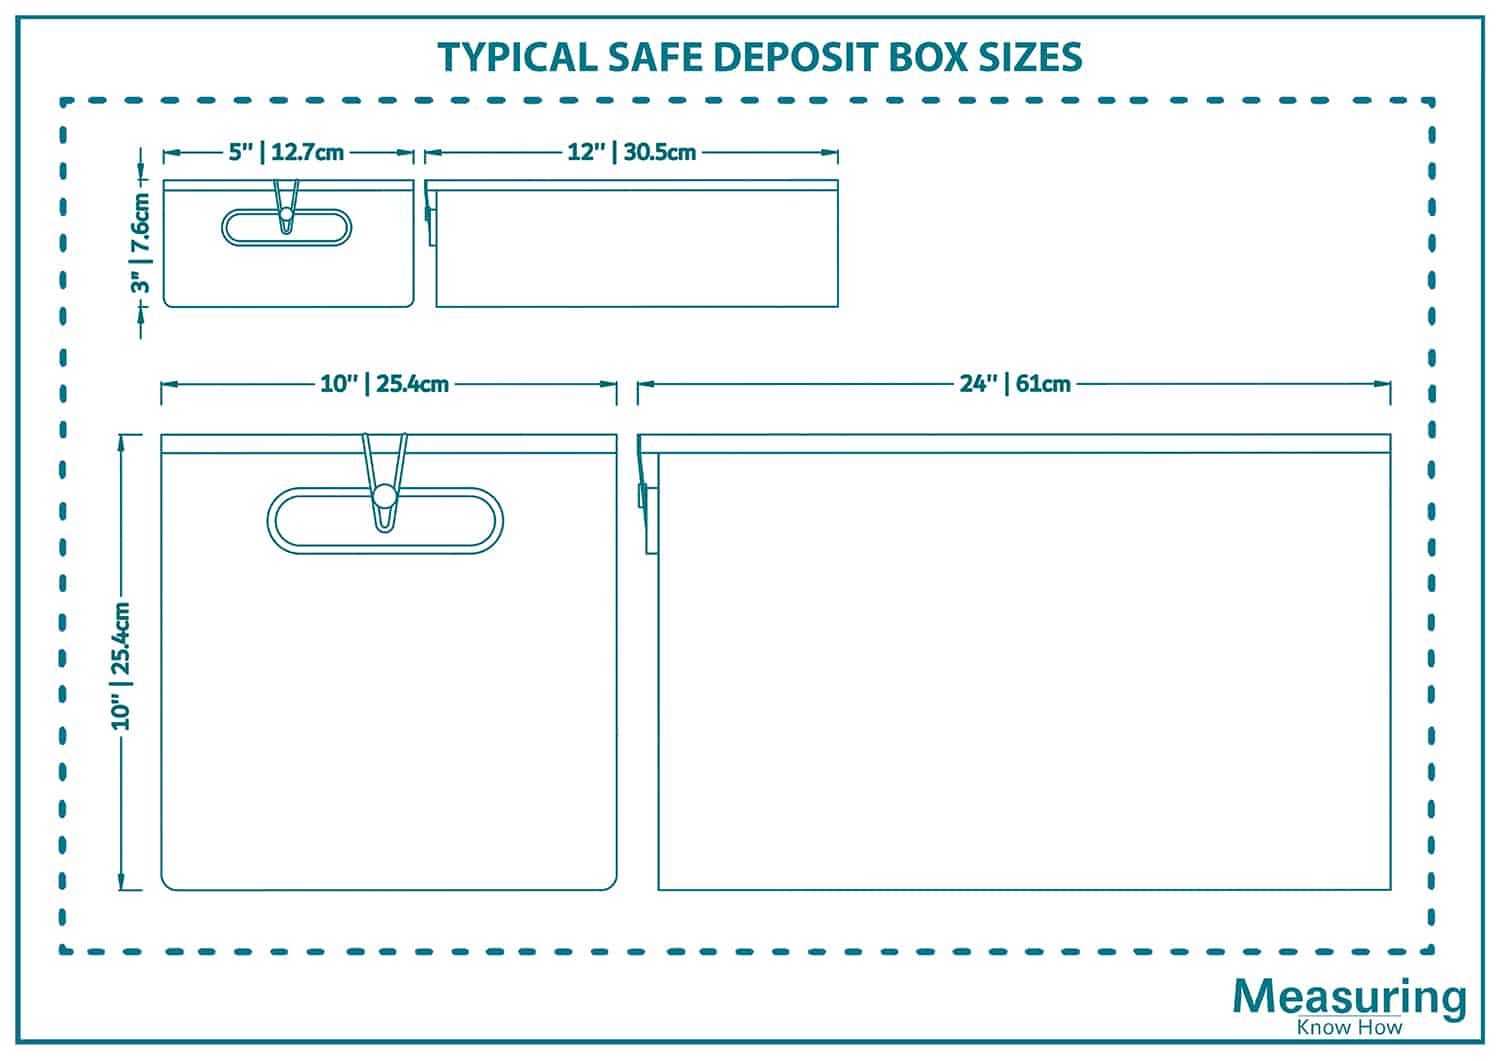 Typical safe deposit box sizes